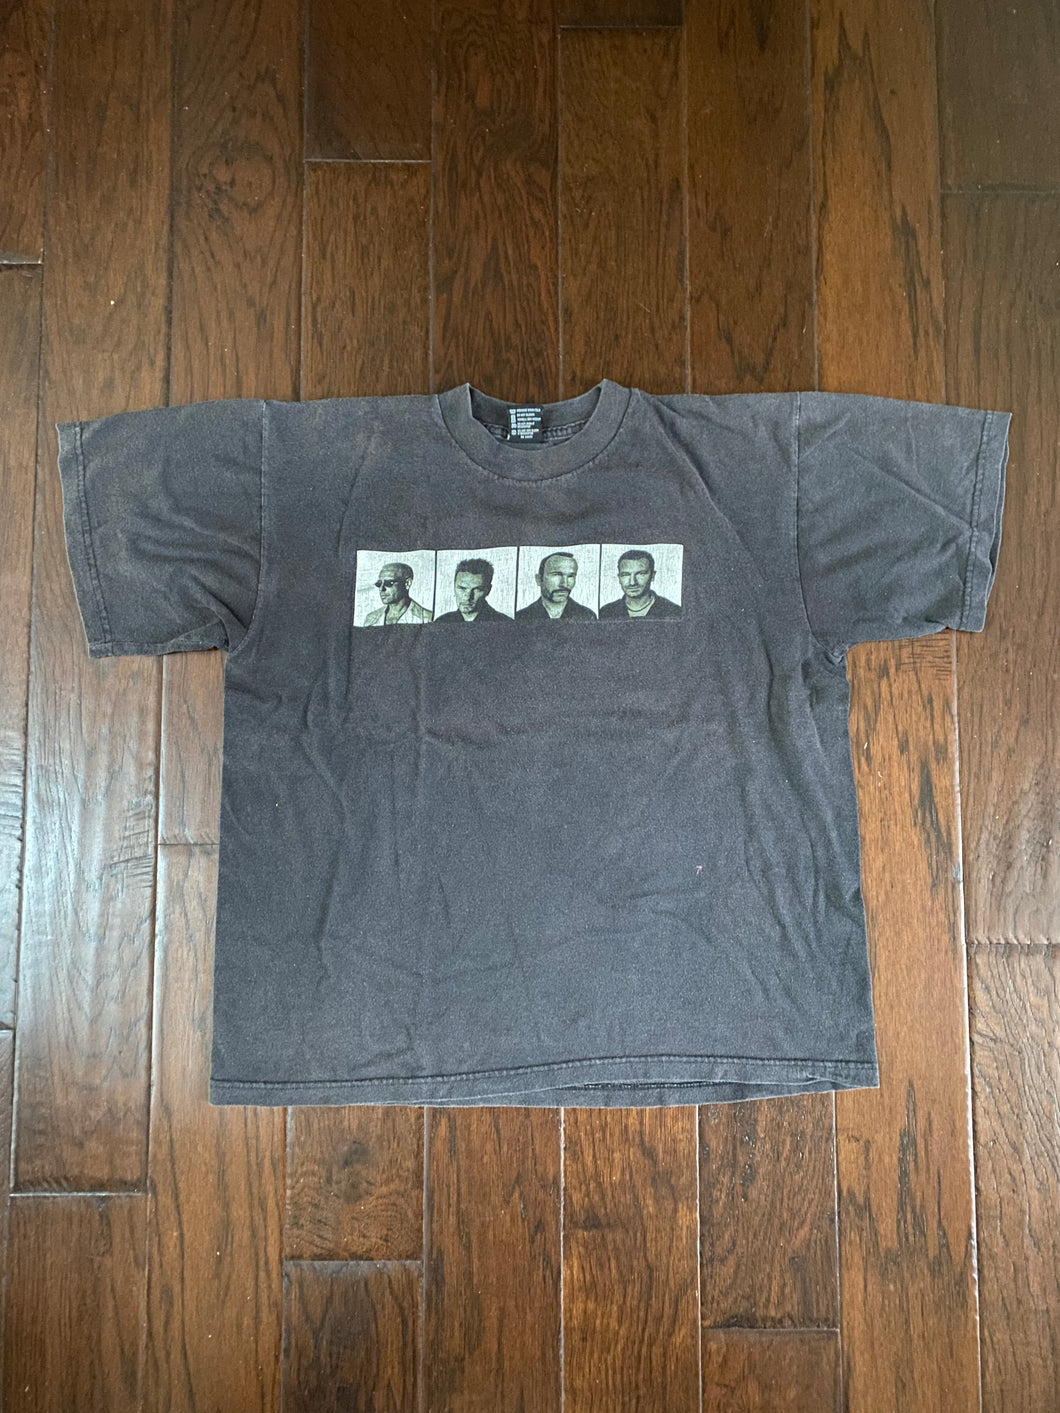 U2 1997 “PopMart Tour” Vintage Distressed T-shirt